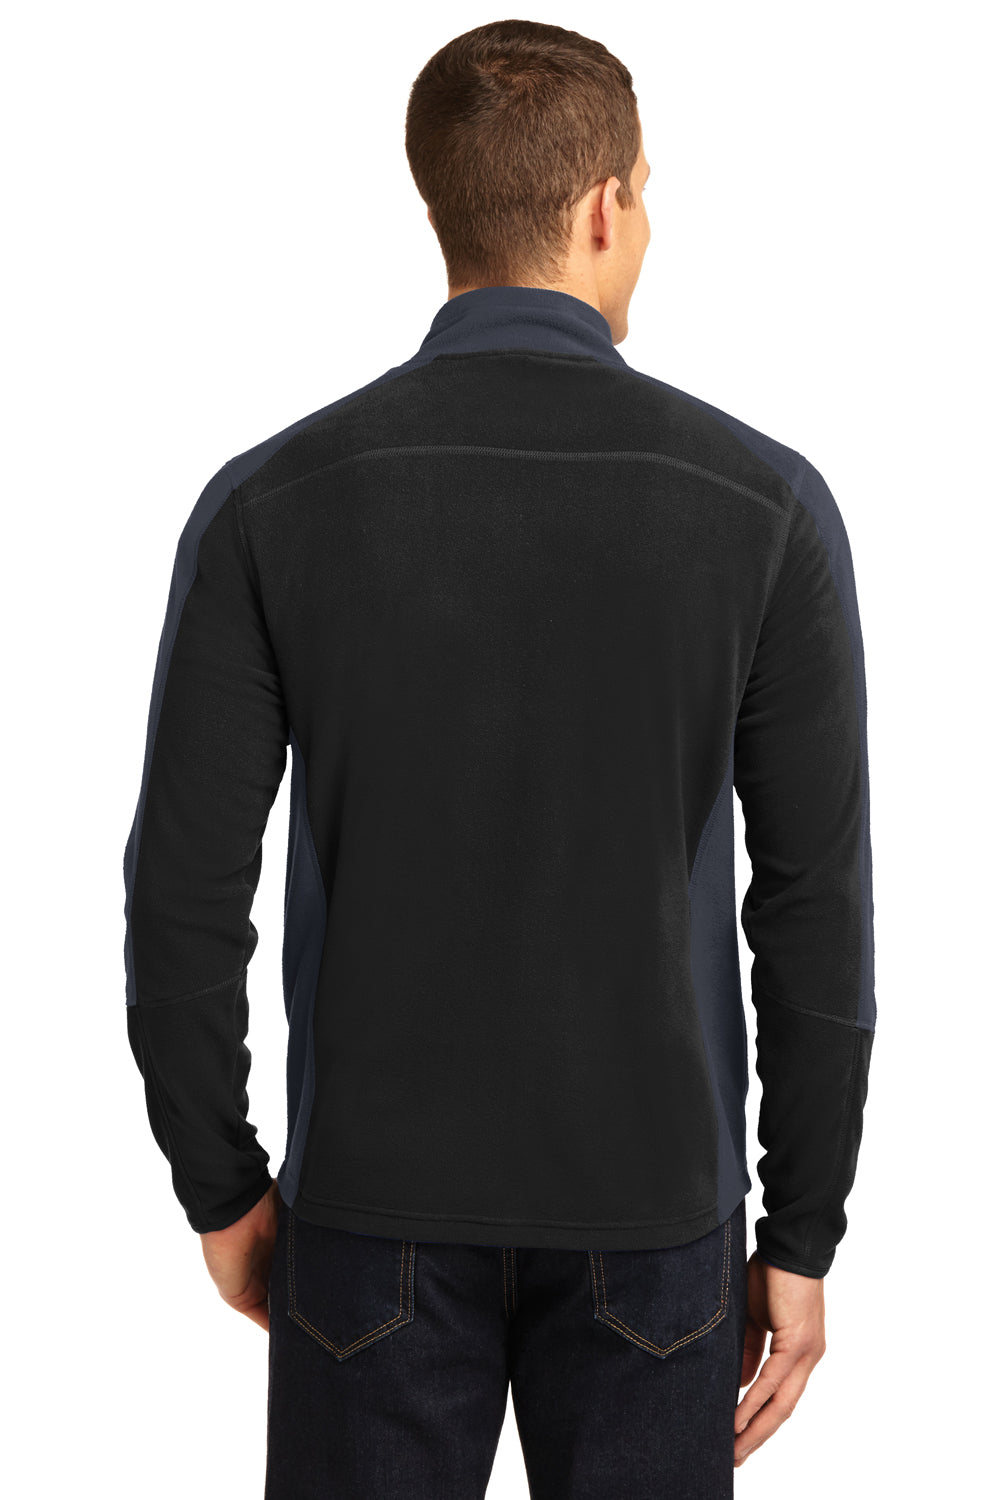 Port Authority F230 Mens Full Zip Microfleece Jacket Black/Grey Back